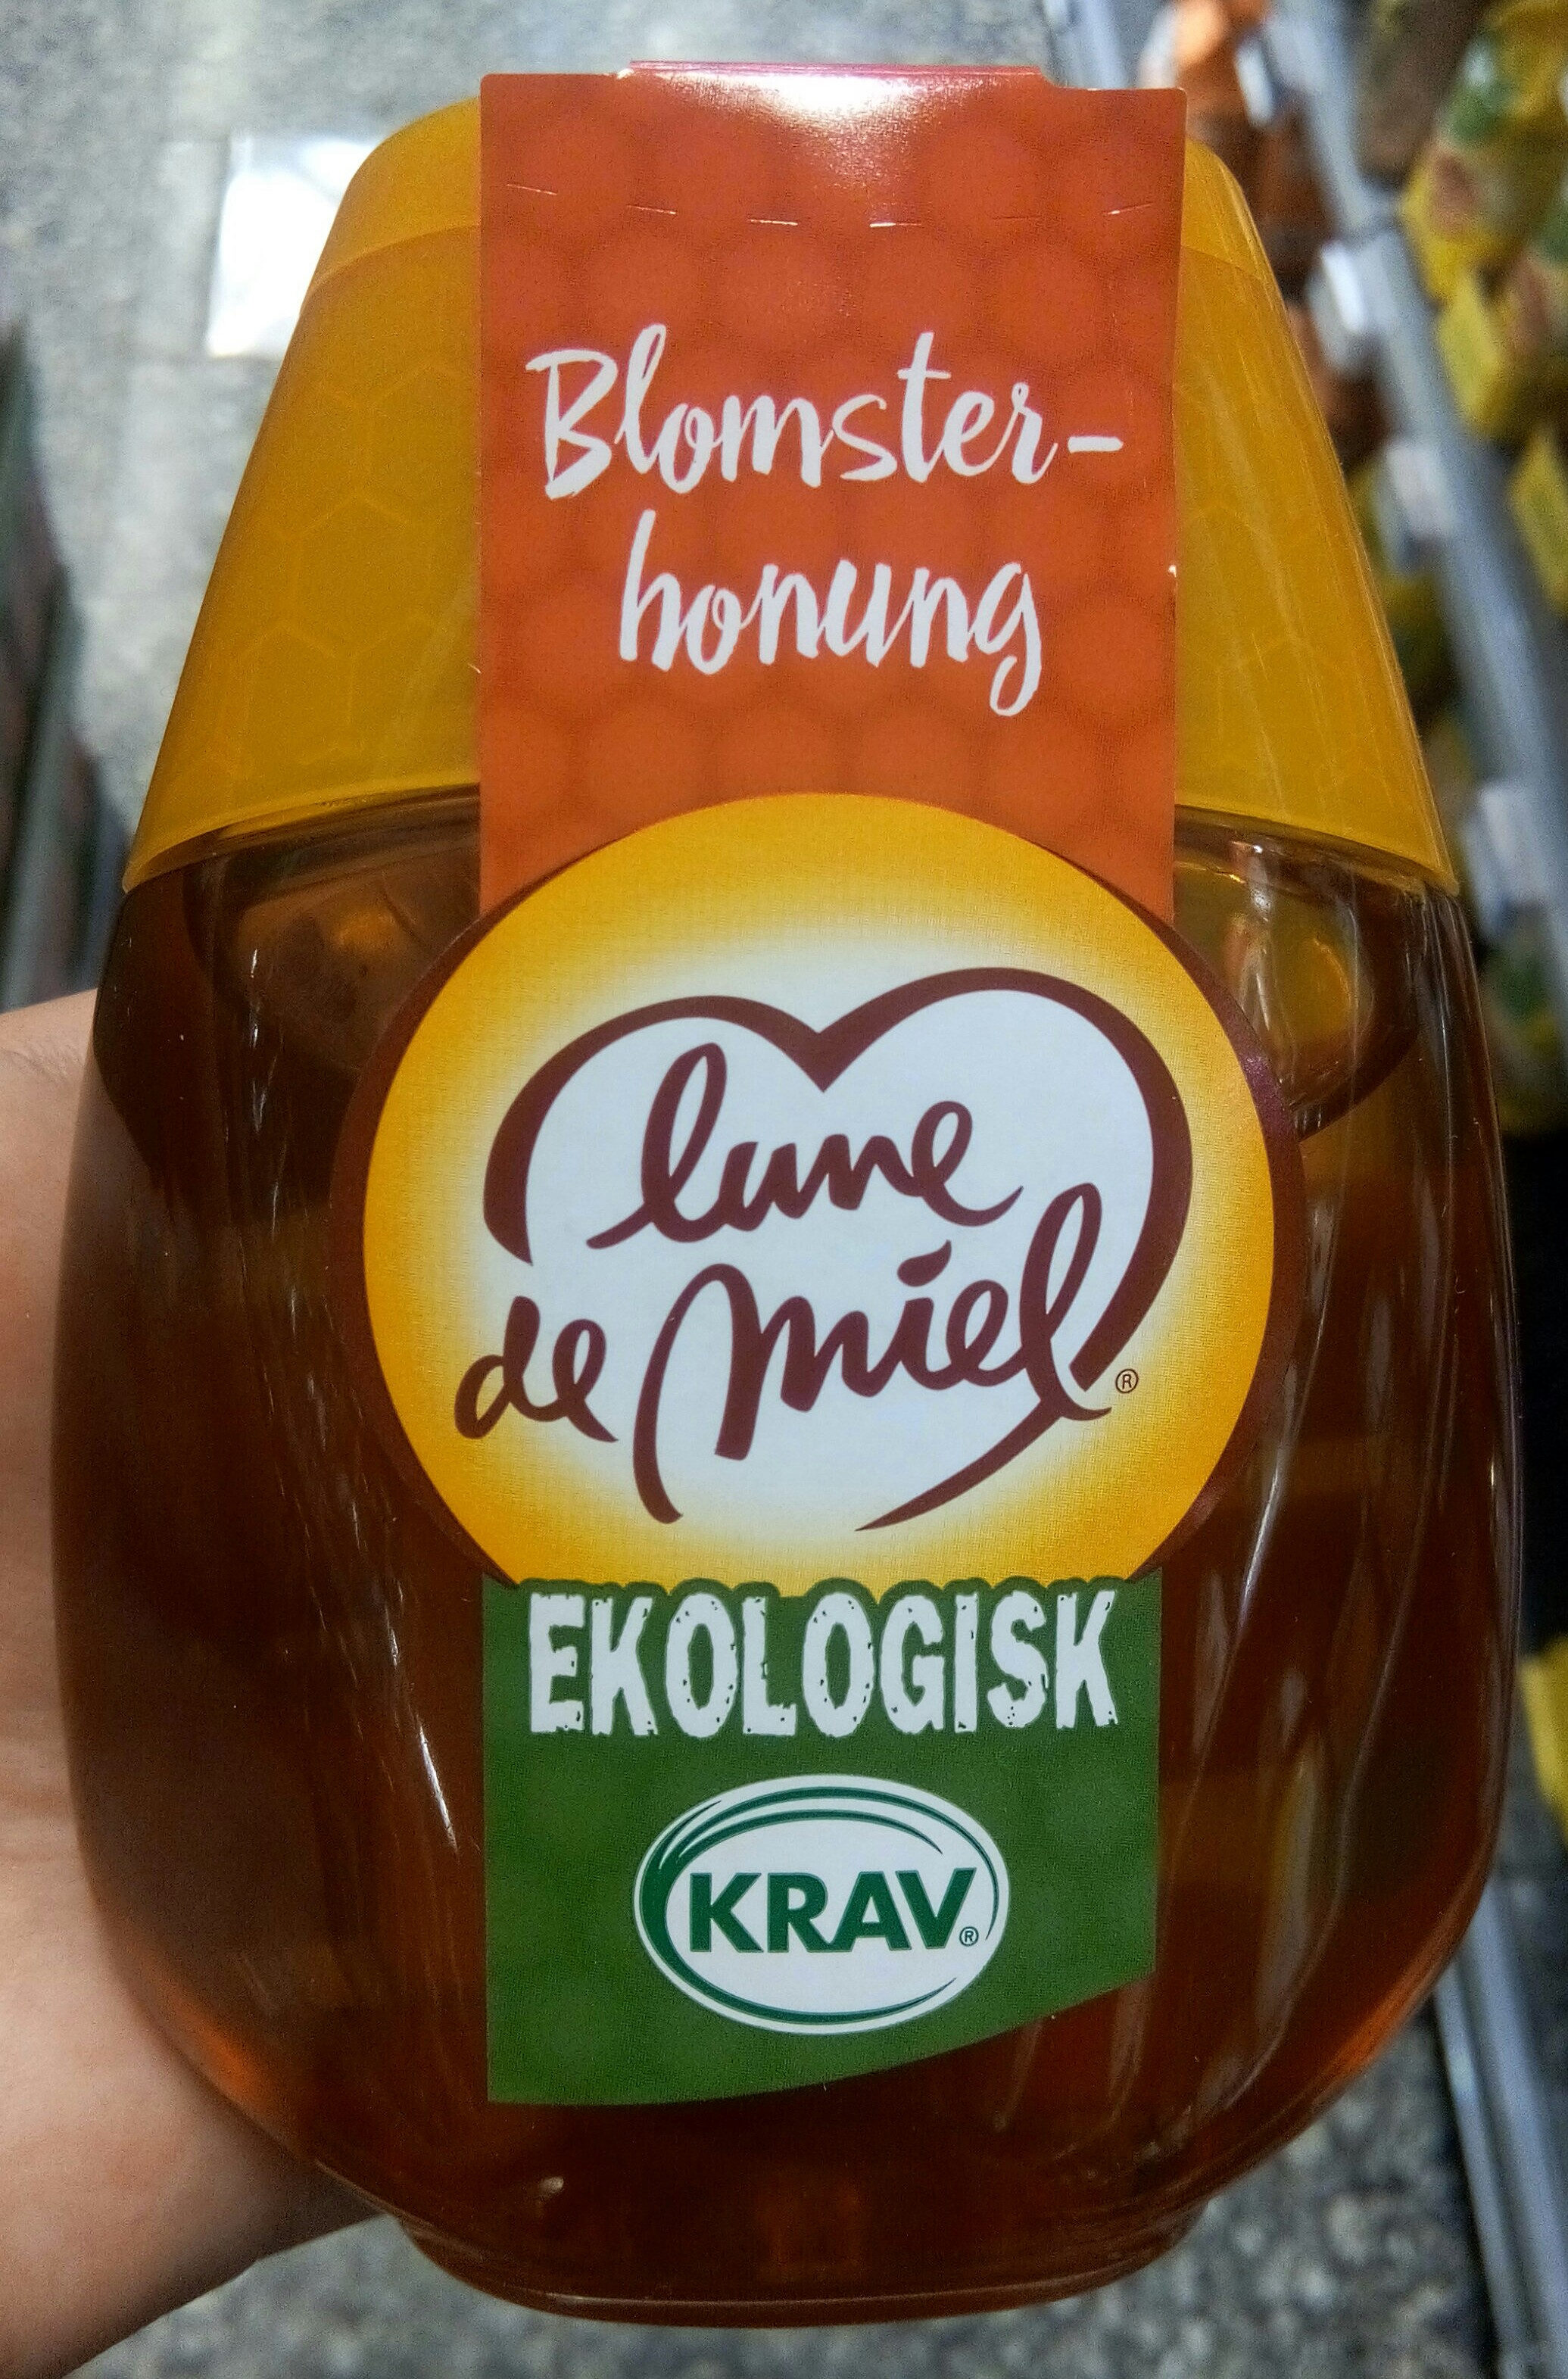 Blomster-honung ekologisk - Produkt - sv